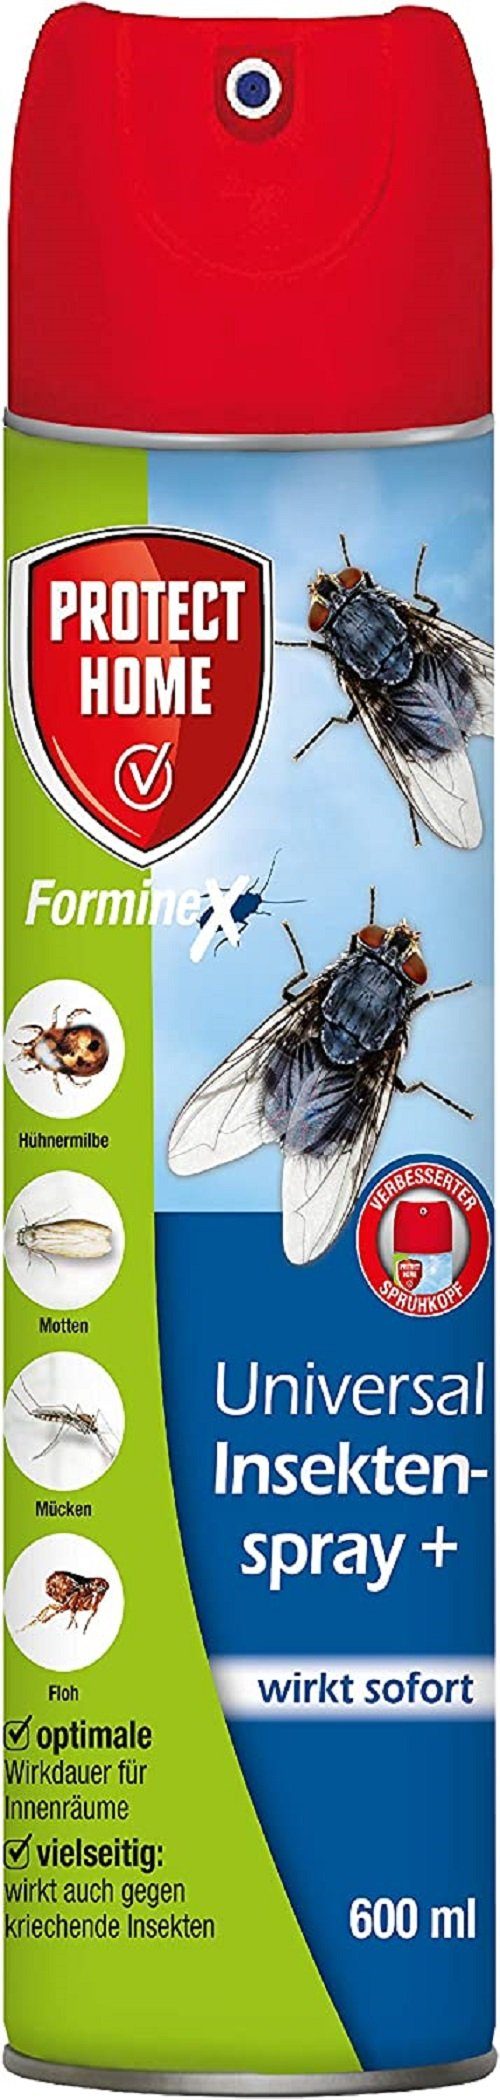 Protect Home Insektenspray Protect ml Home FormineX Universal 600 Insektenspray